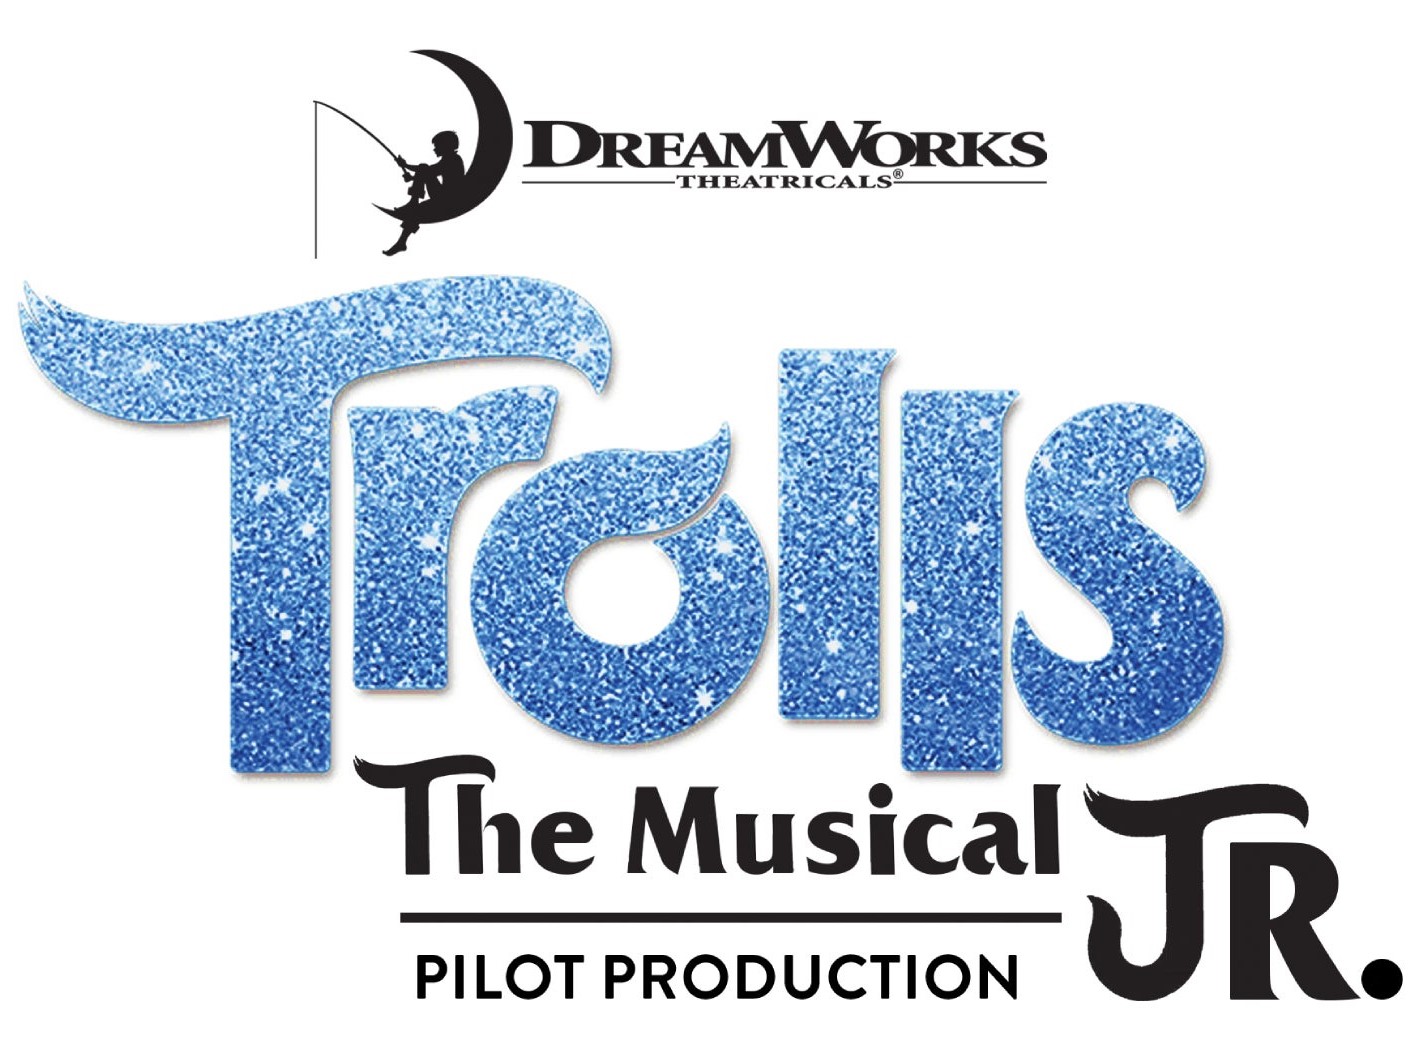 Dreamworks Theatricals: Trolls the Musical Jr.